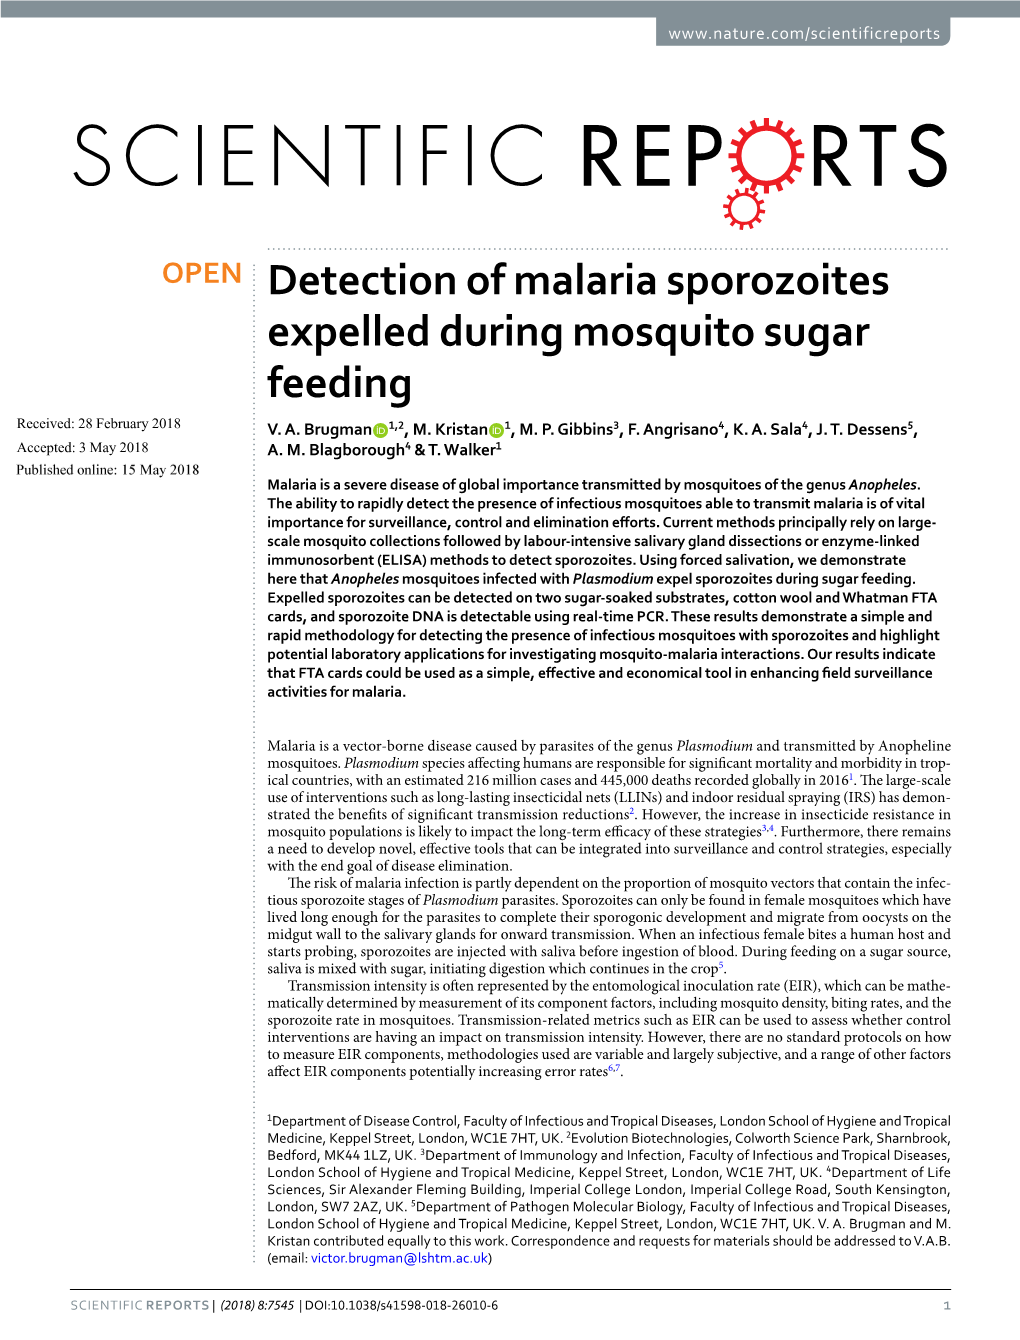 Detection of Malaria Sporozoites Expelled During Mosquito Sugar Feeding Received: 28 February 2018 V